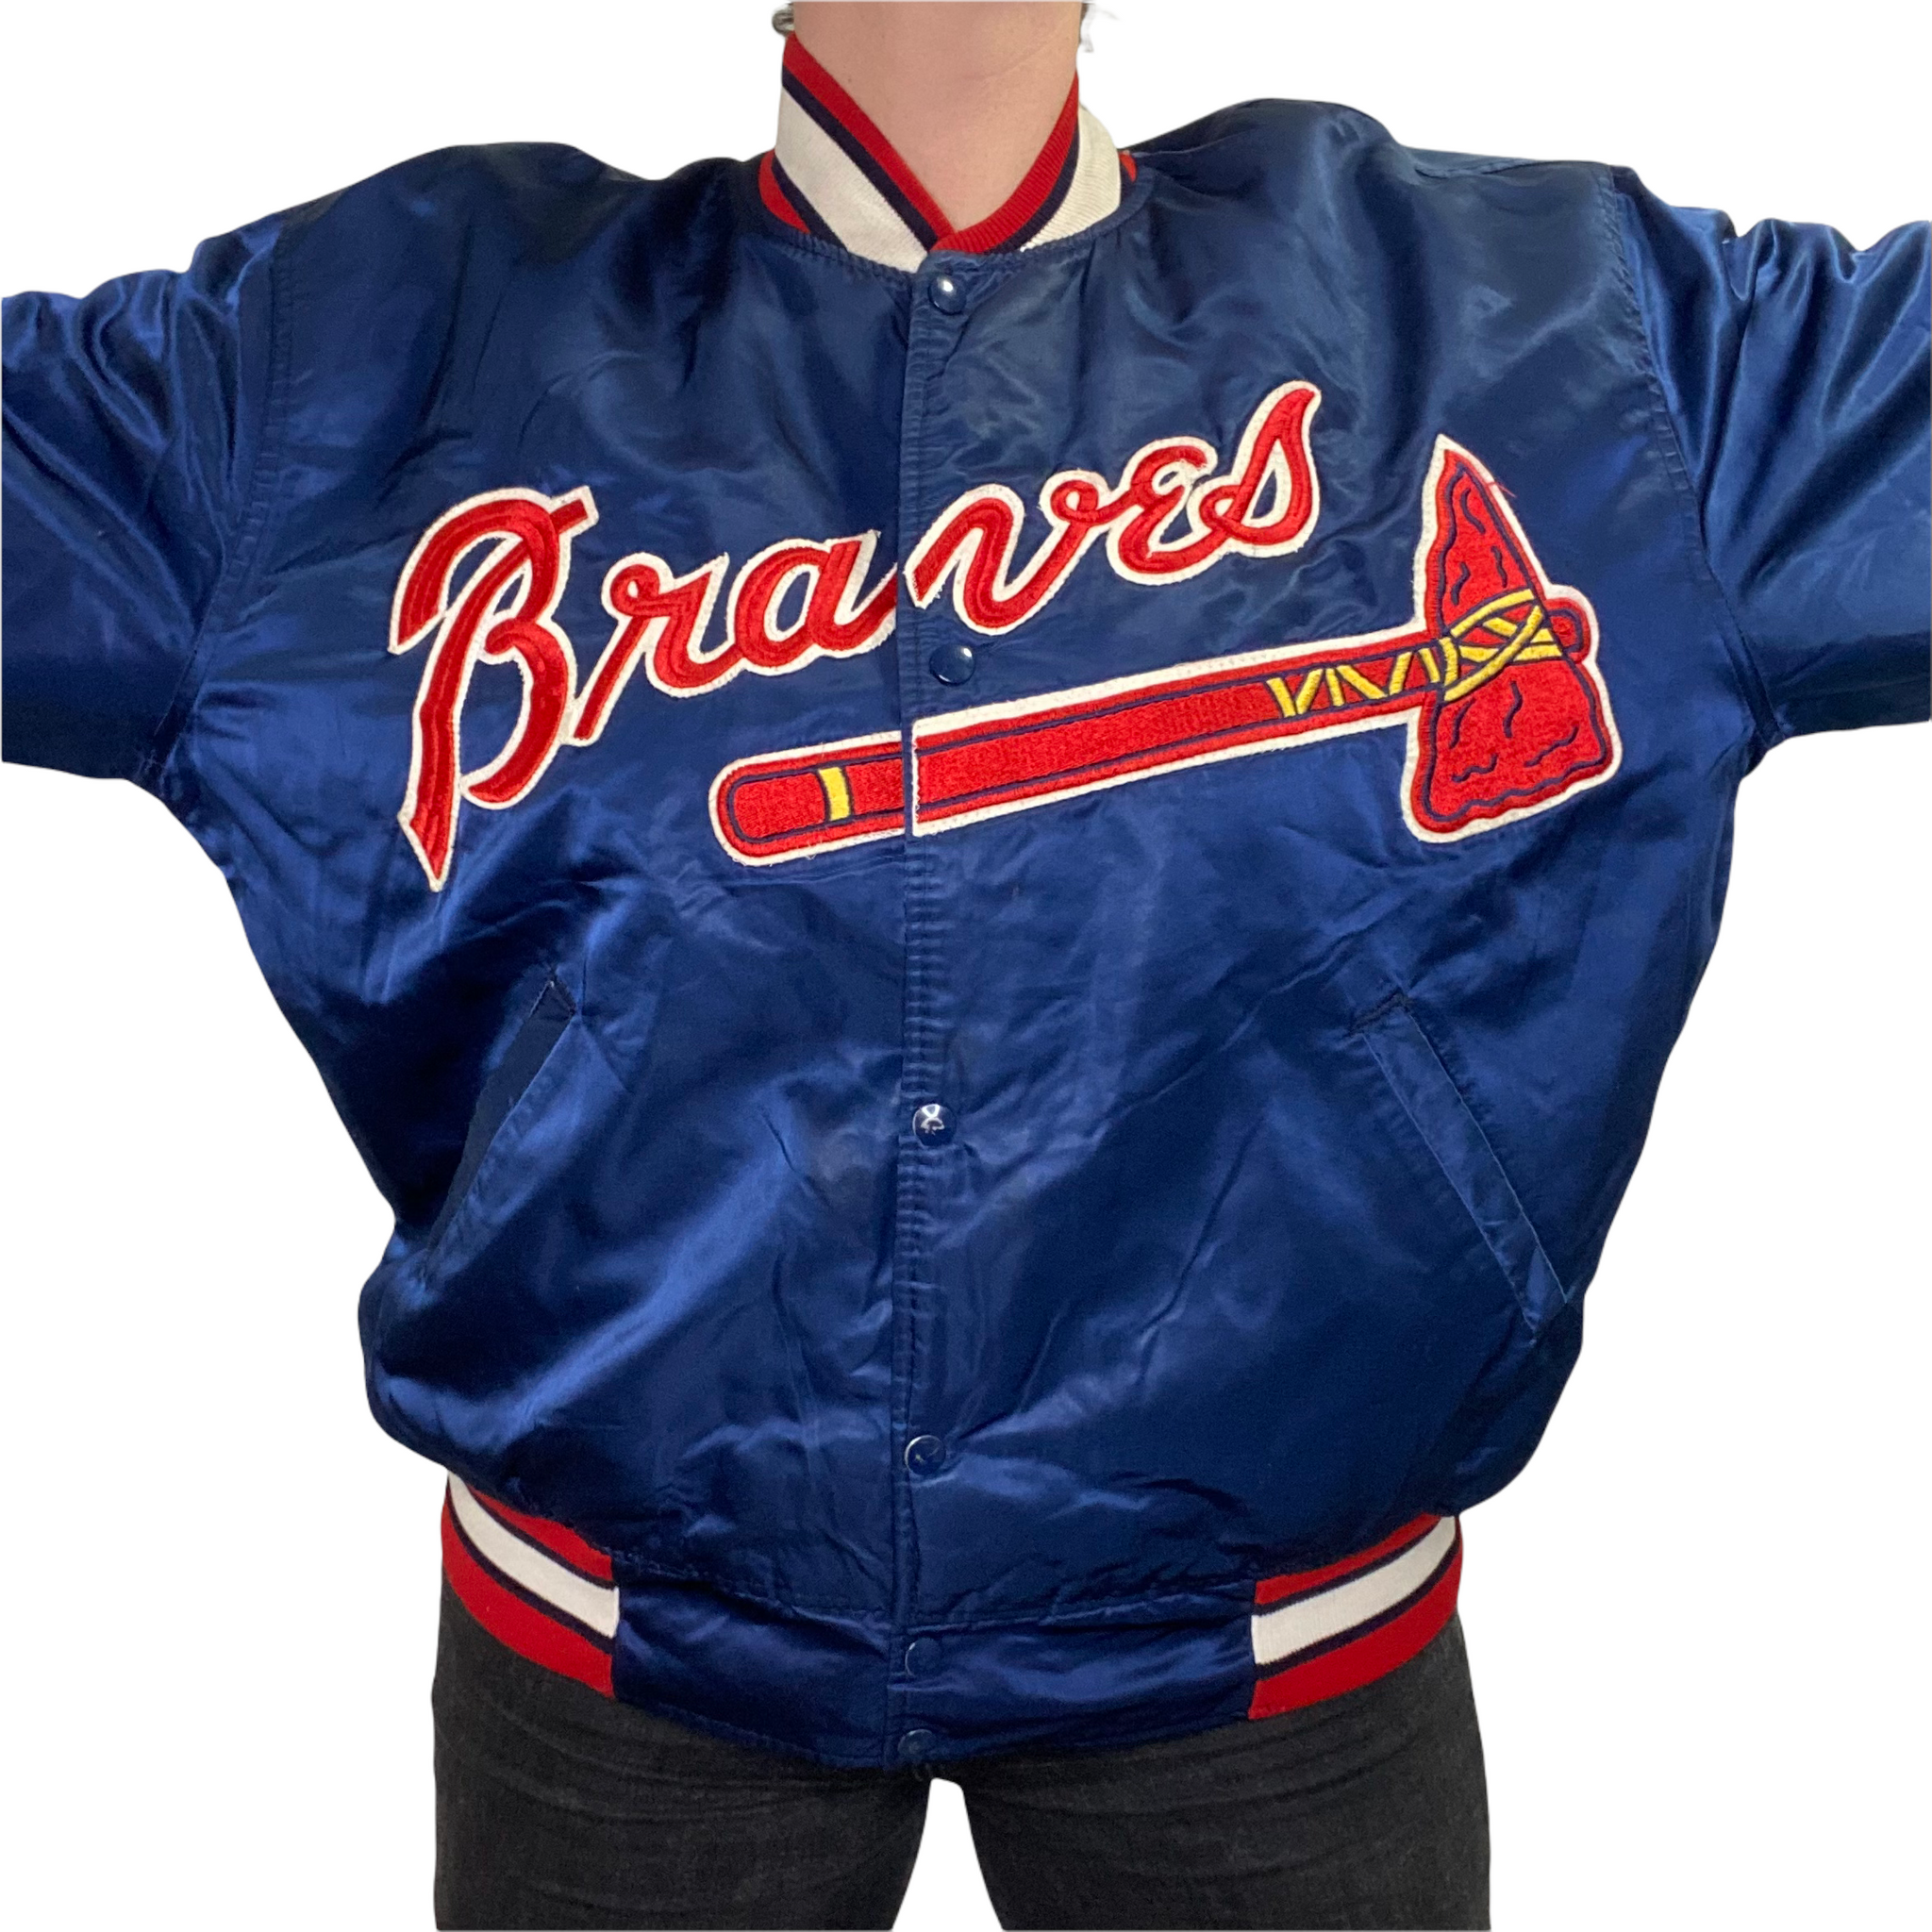 Vintage MLB Team Atlanta Braves Leather Jacket - Maker of Jacket